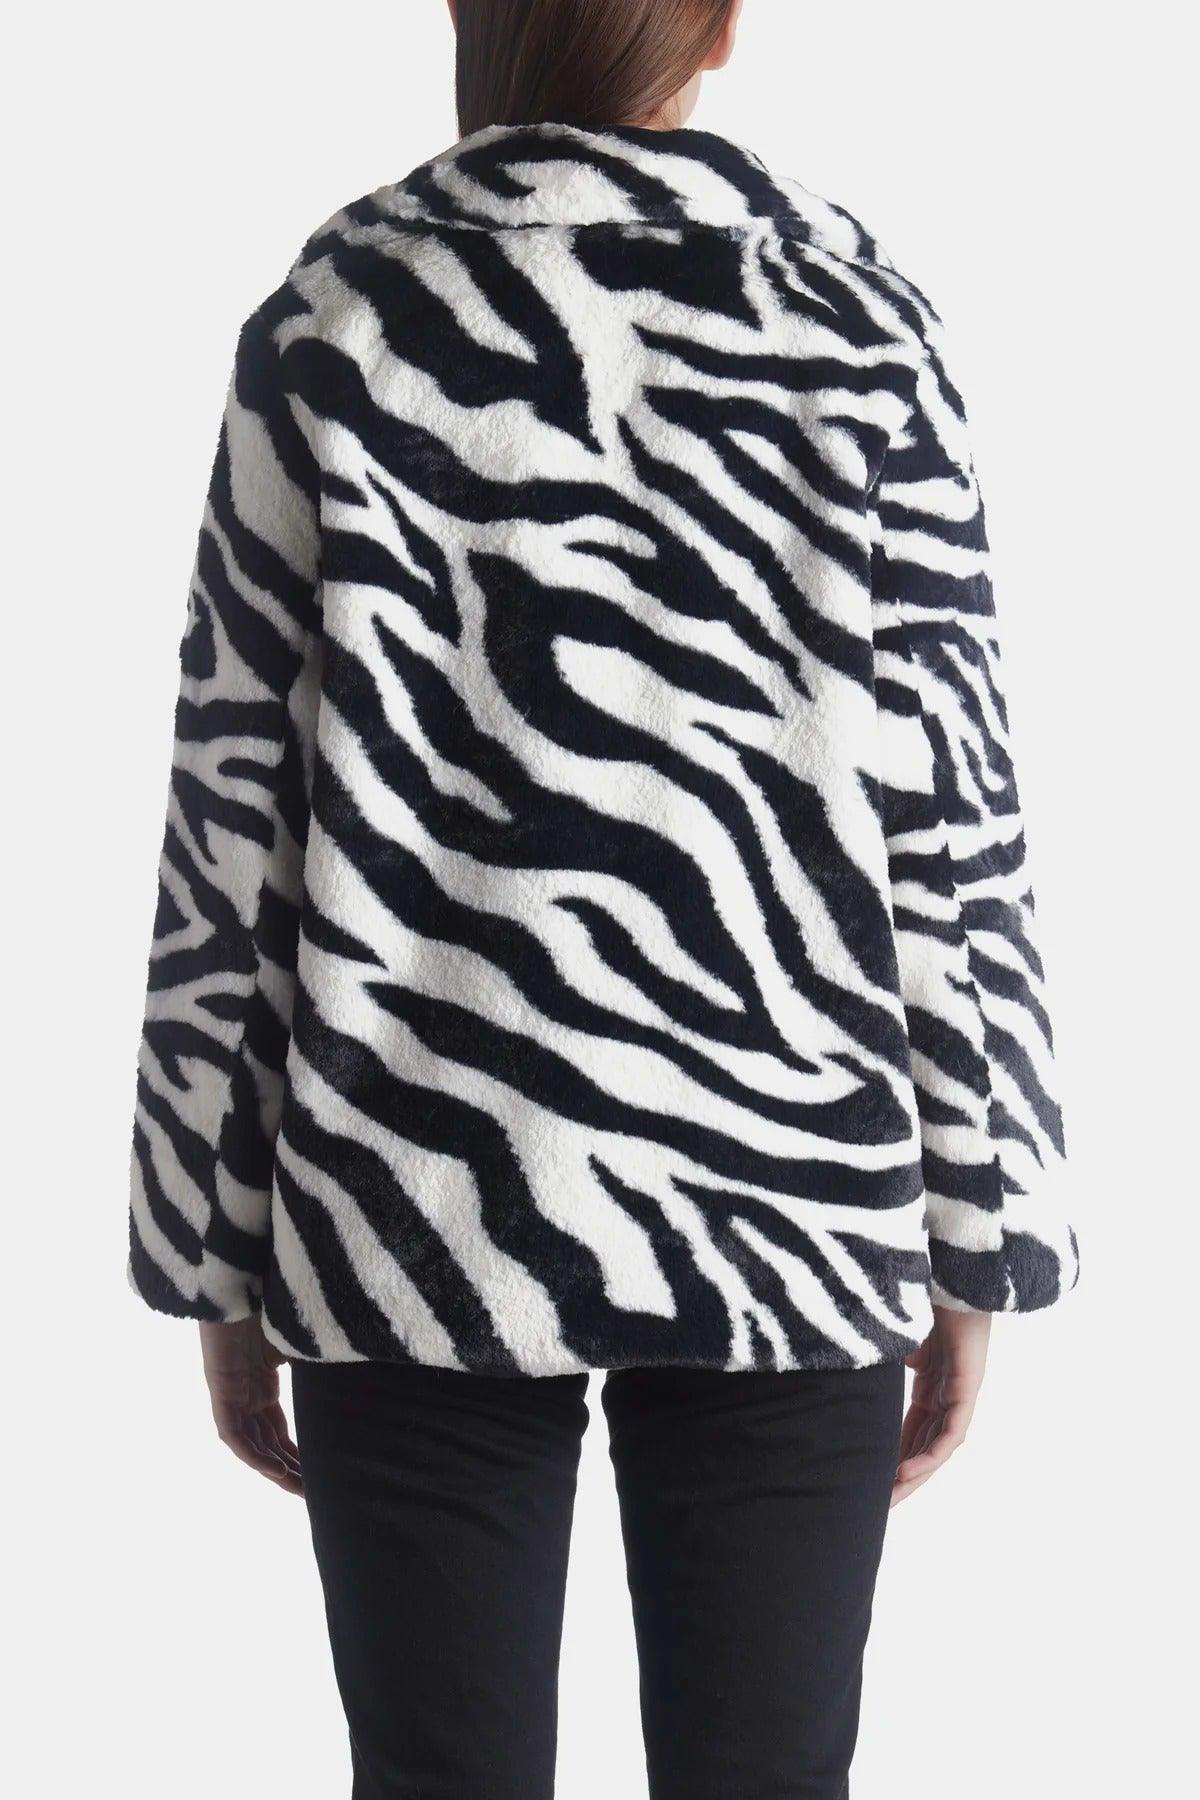 Kathy Ireland Women's Printed Zebra Faux Fur Coat Size L - SVNYFancy